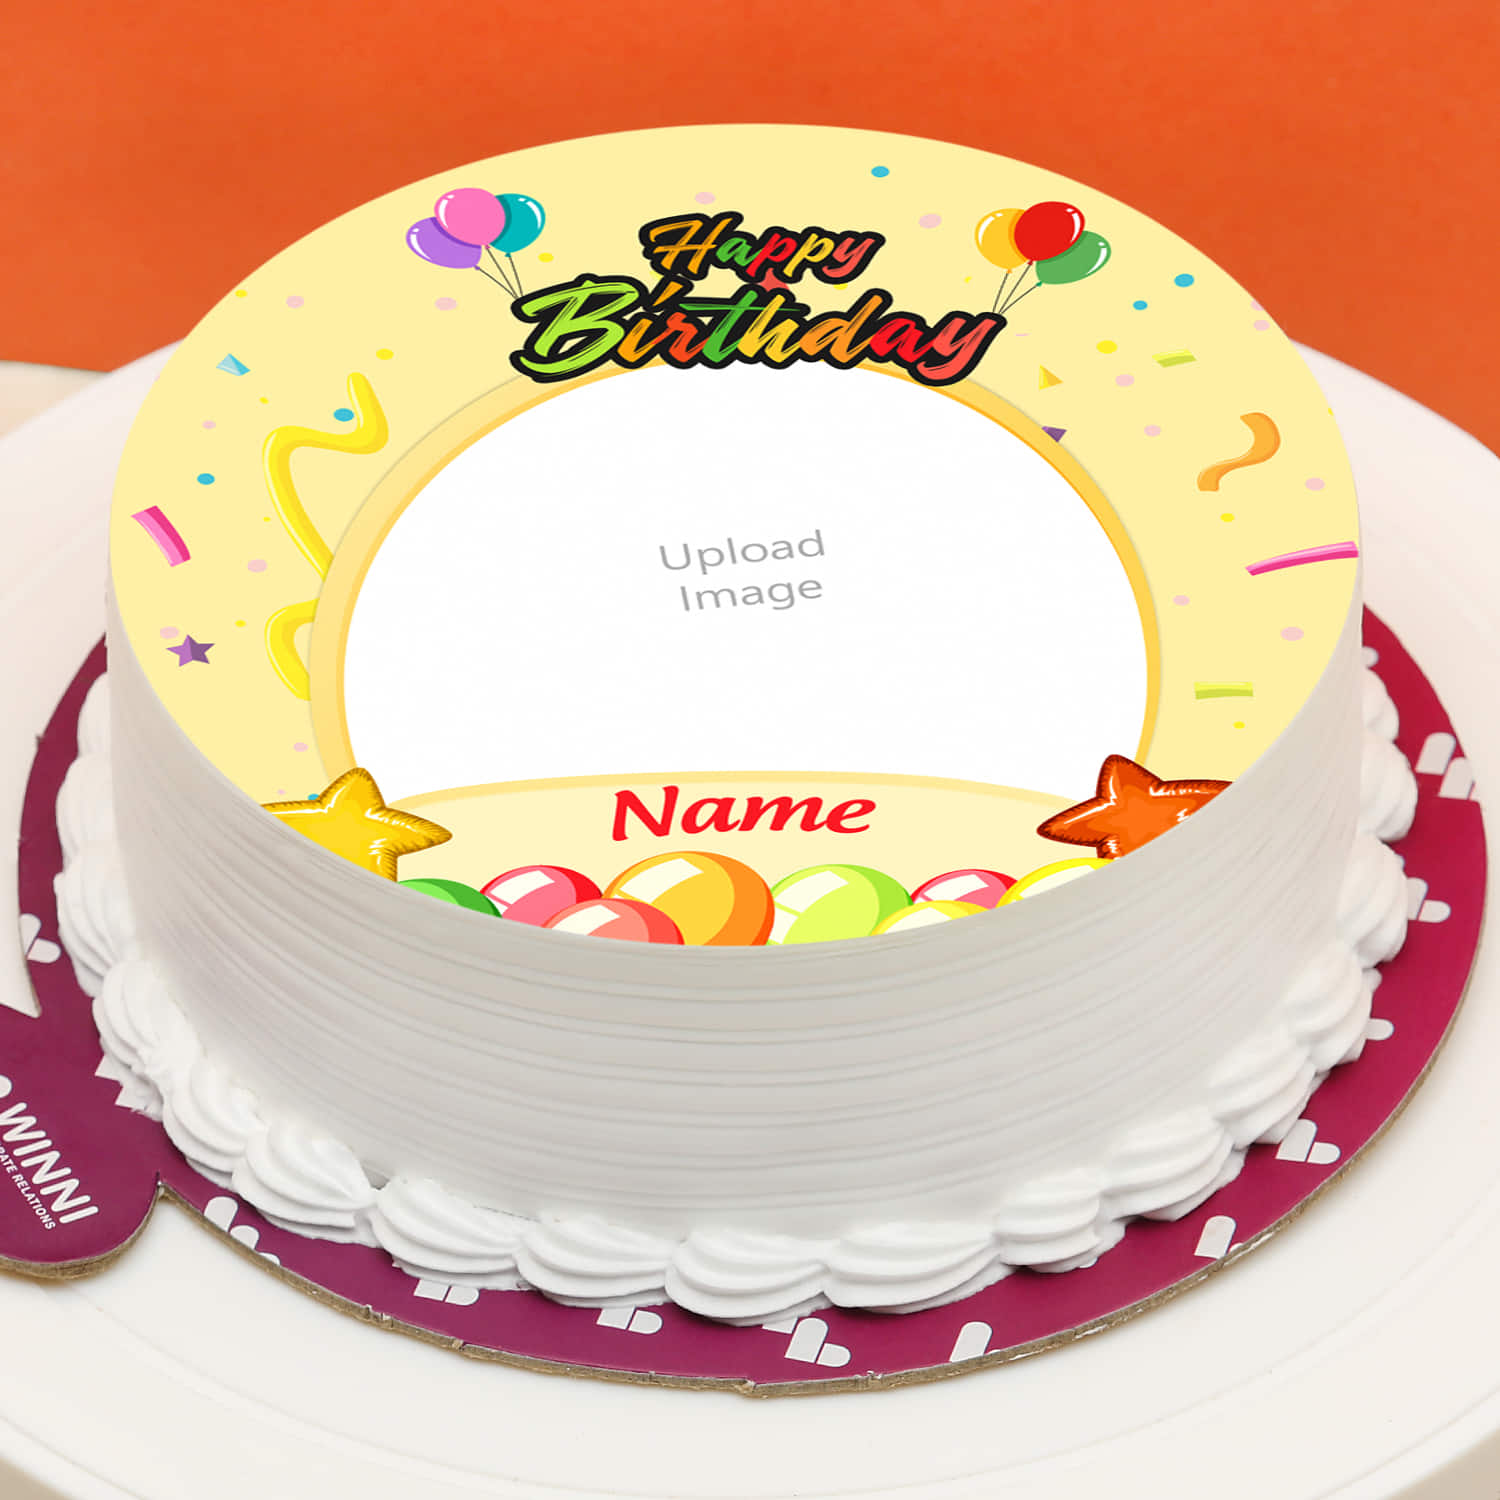 Black Forest Cake | Buy, Send or Order Online | Winni | Winni.in